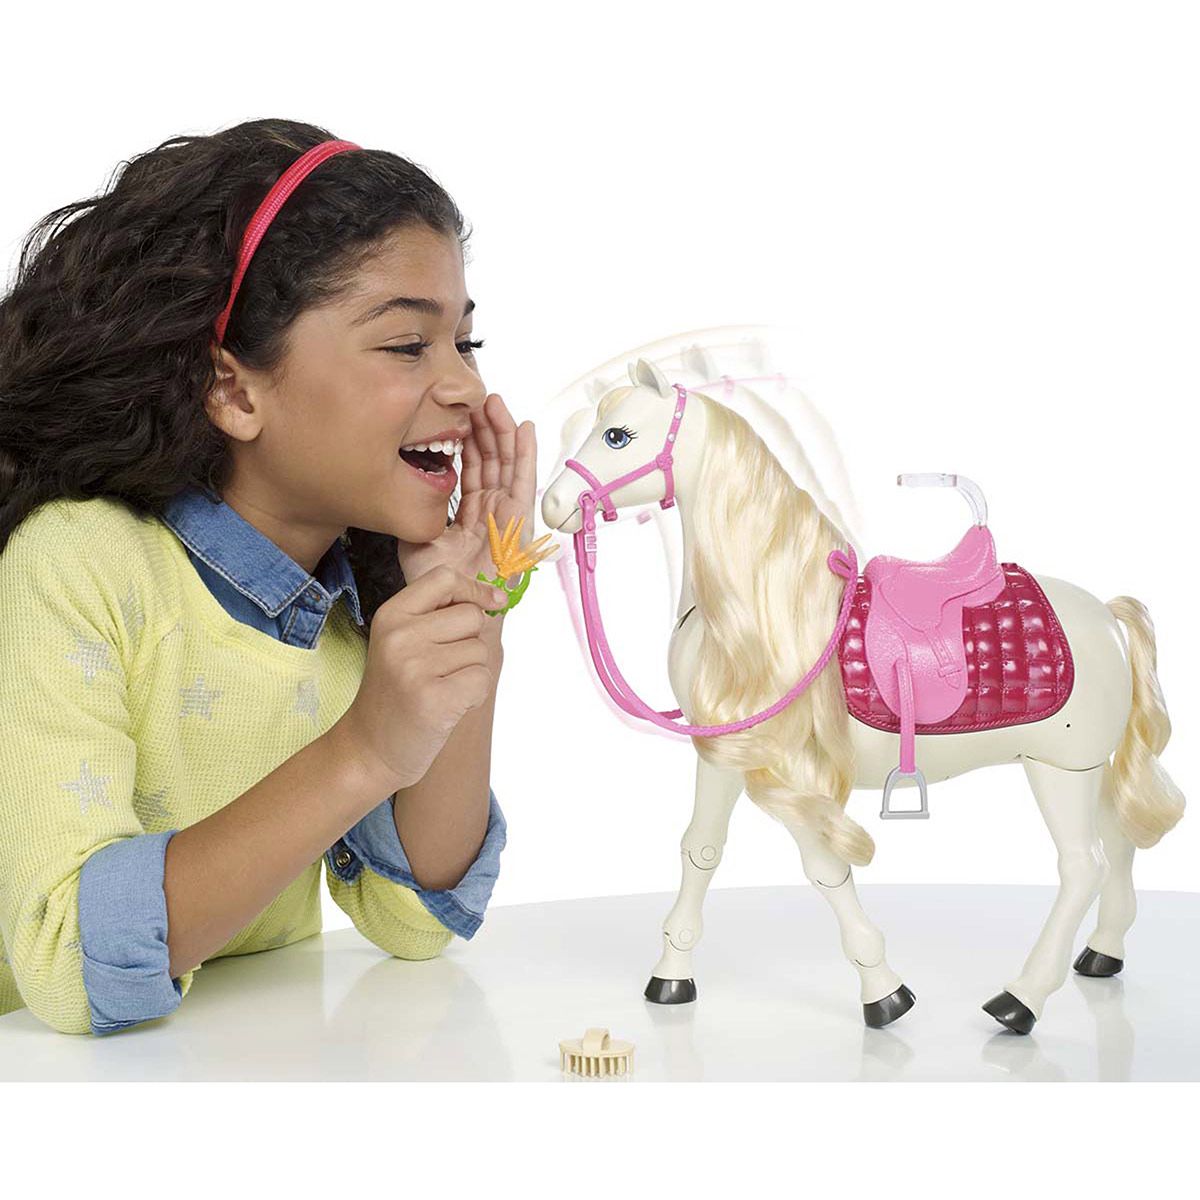 barbie cheval dream horse